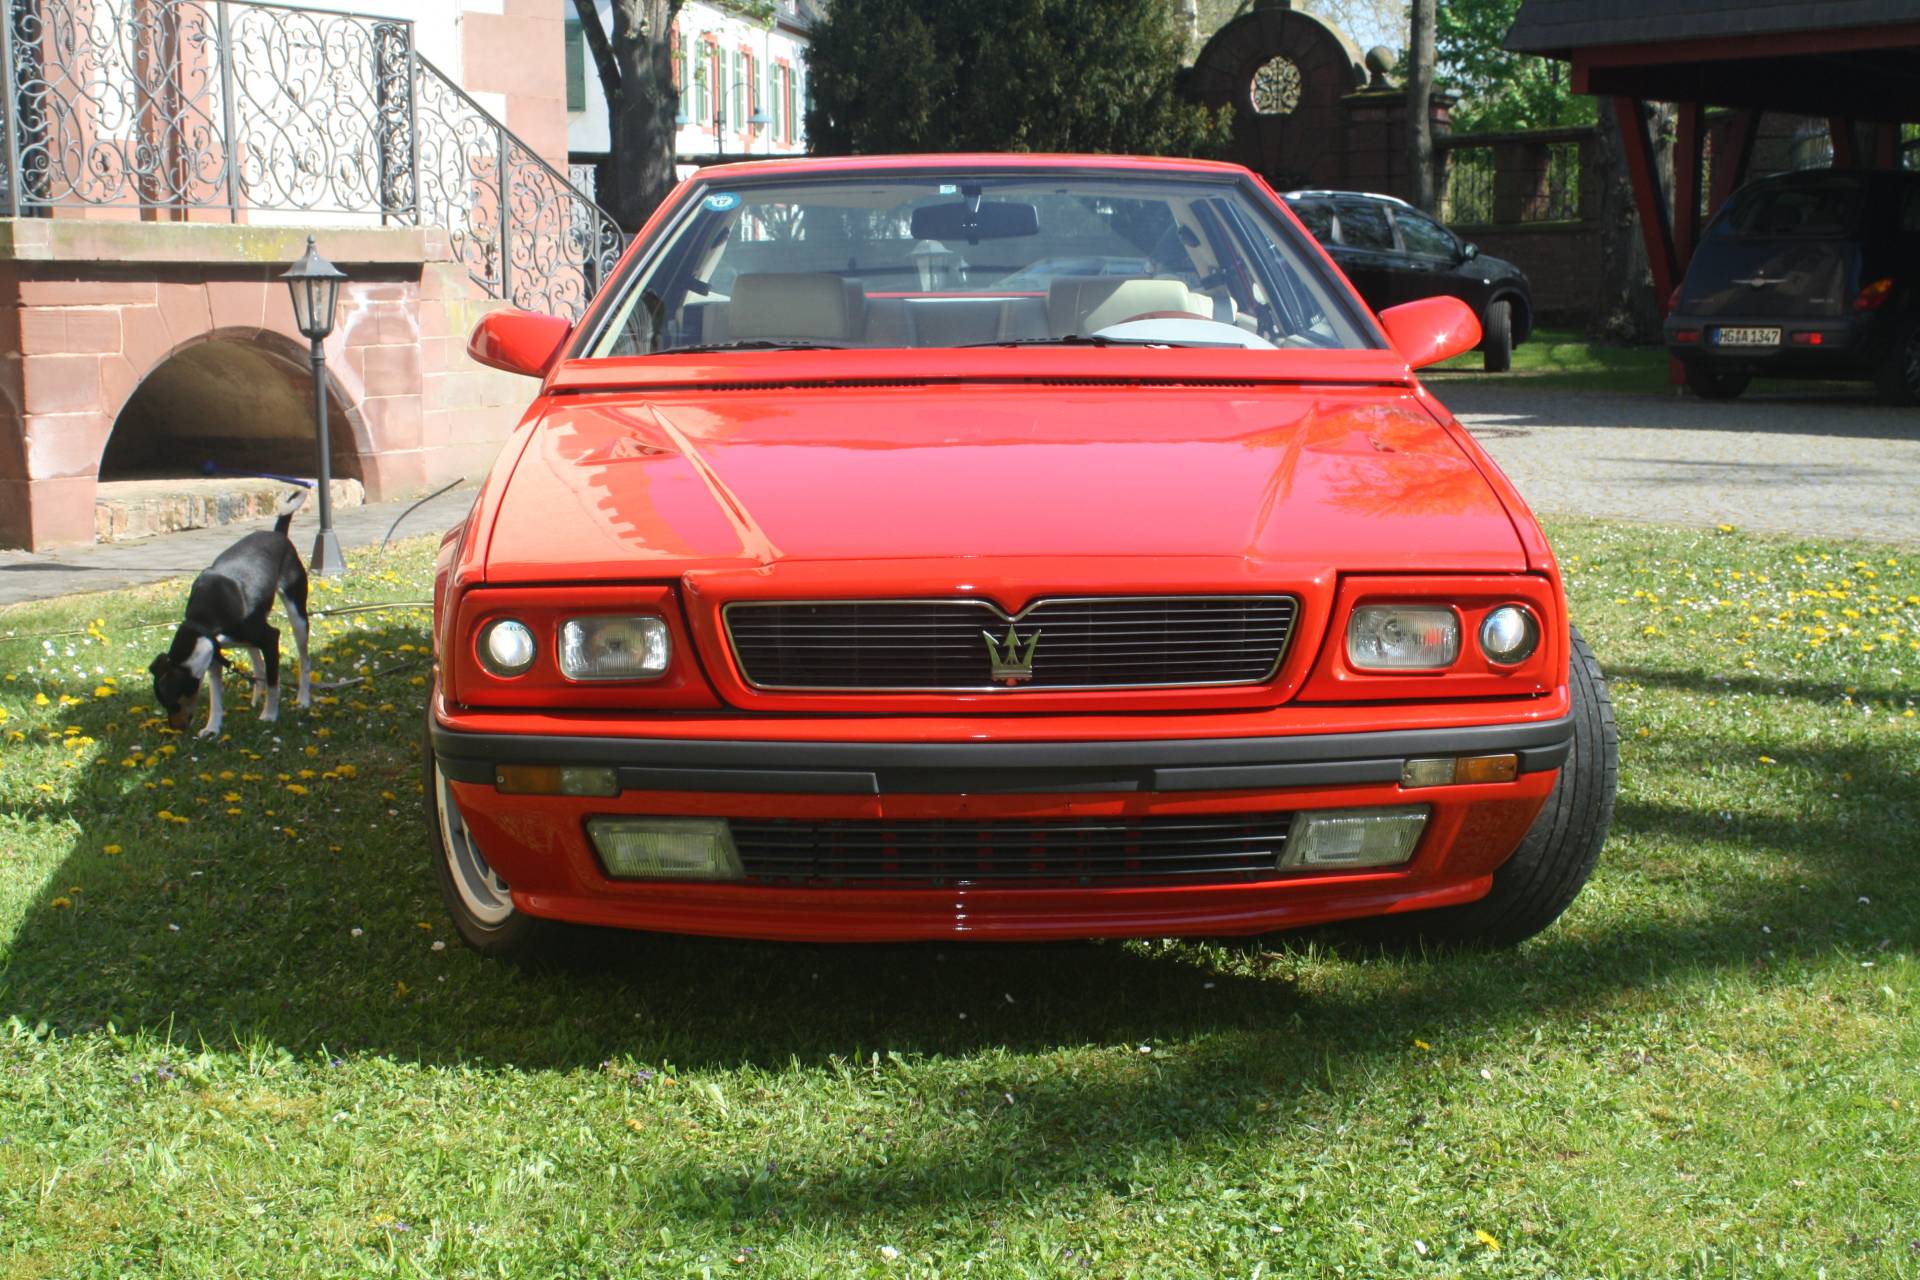 For Sale: Maserati 222 4V (1992) offered for AUD 30,560